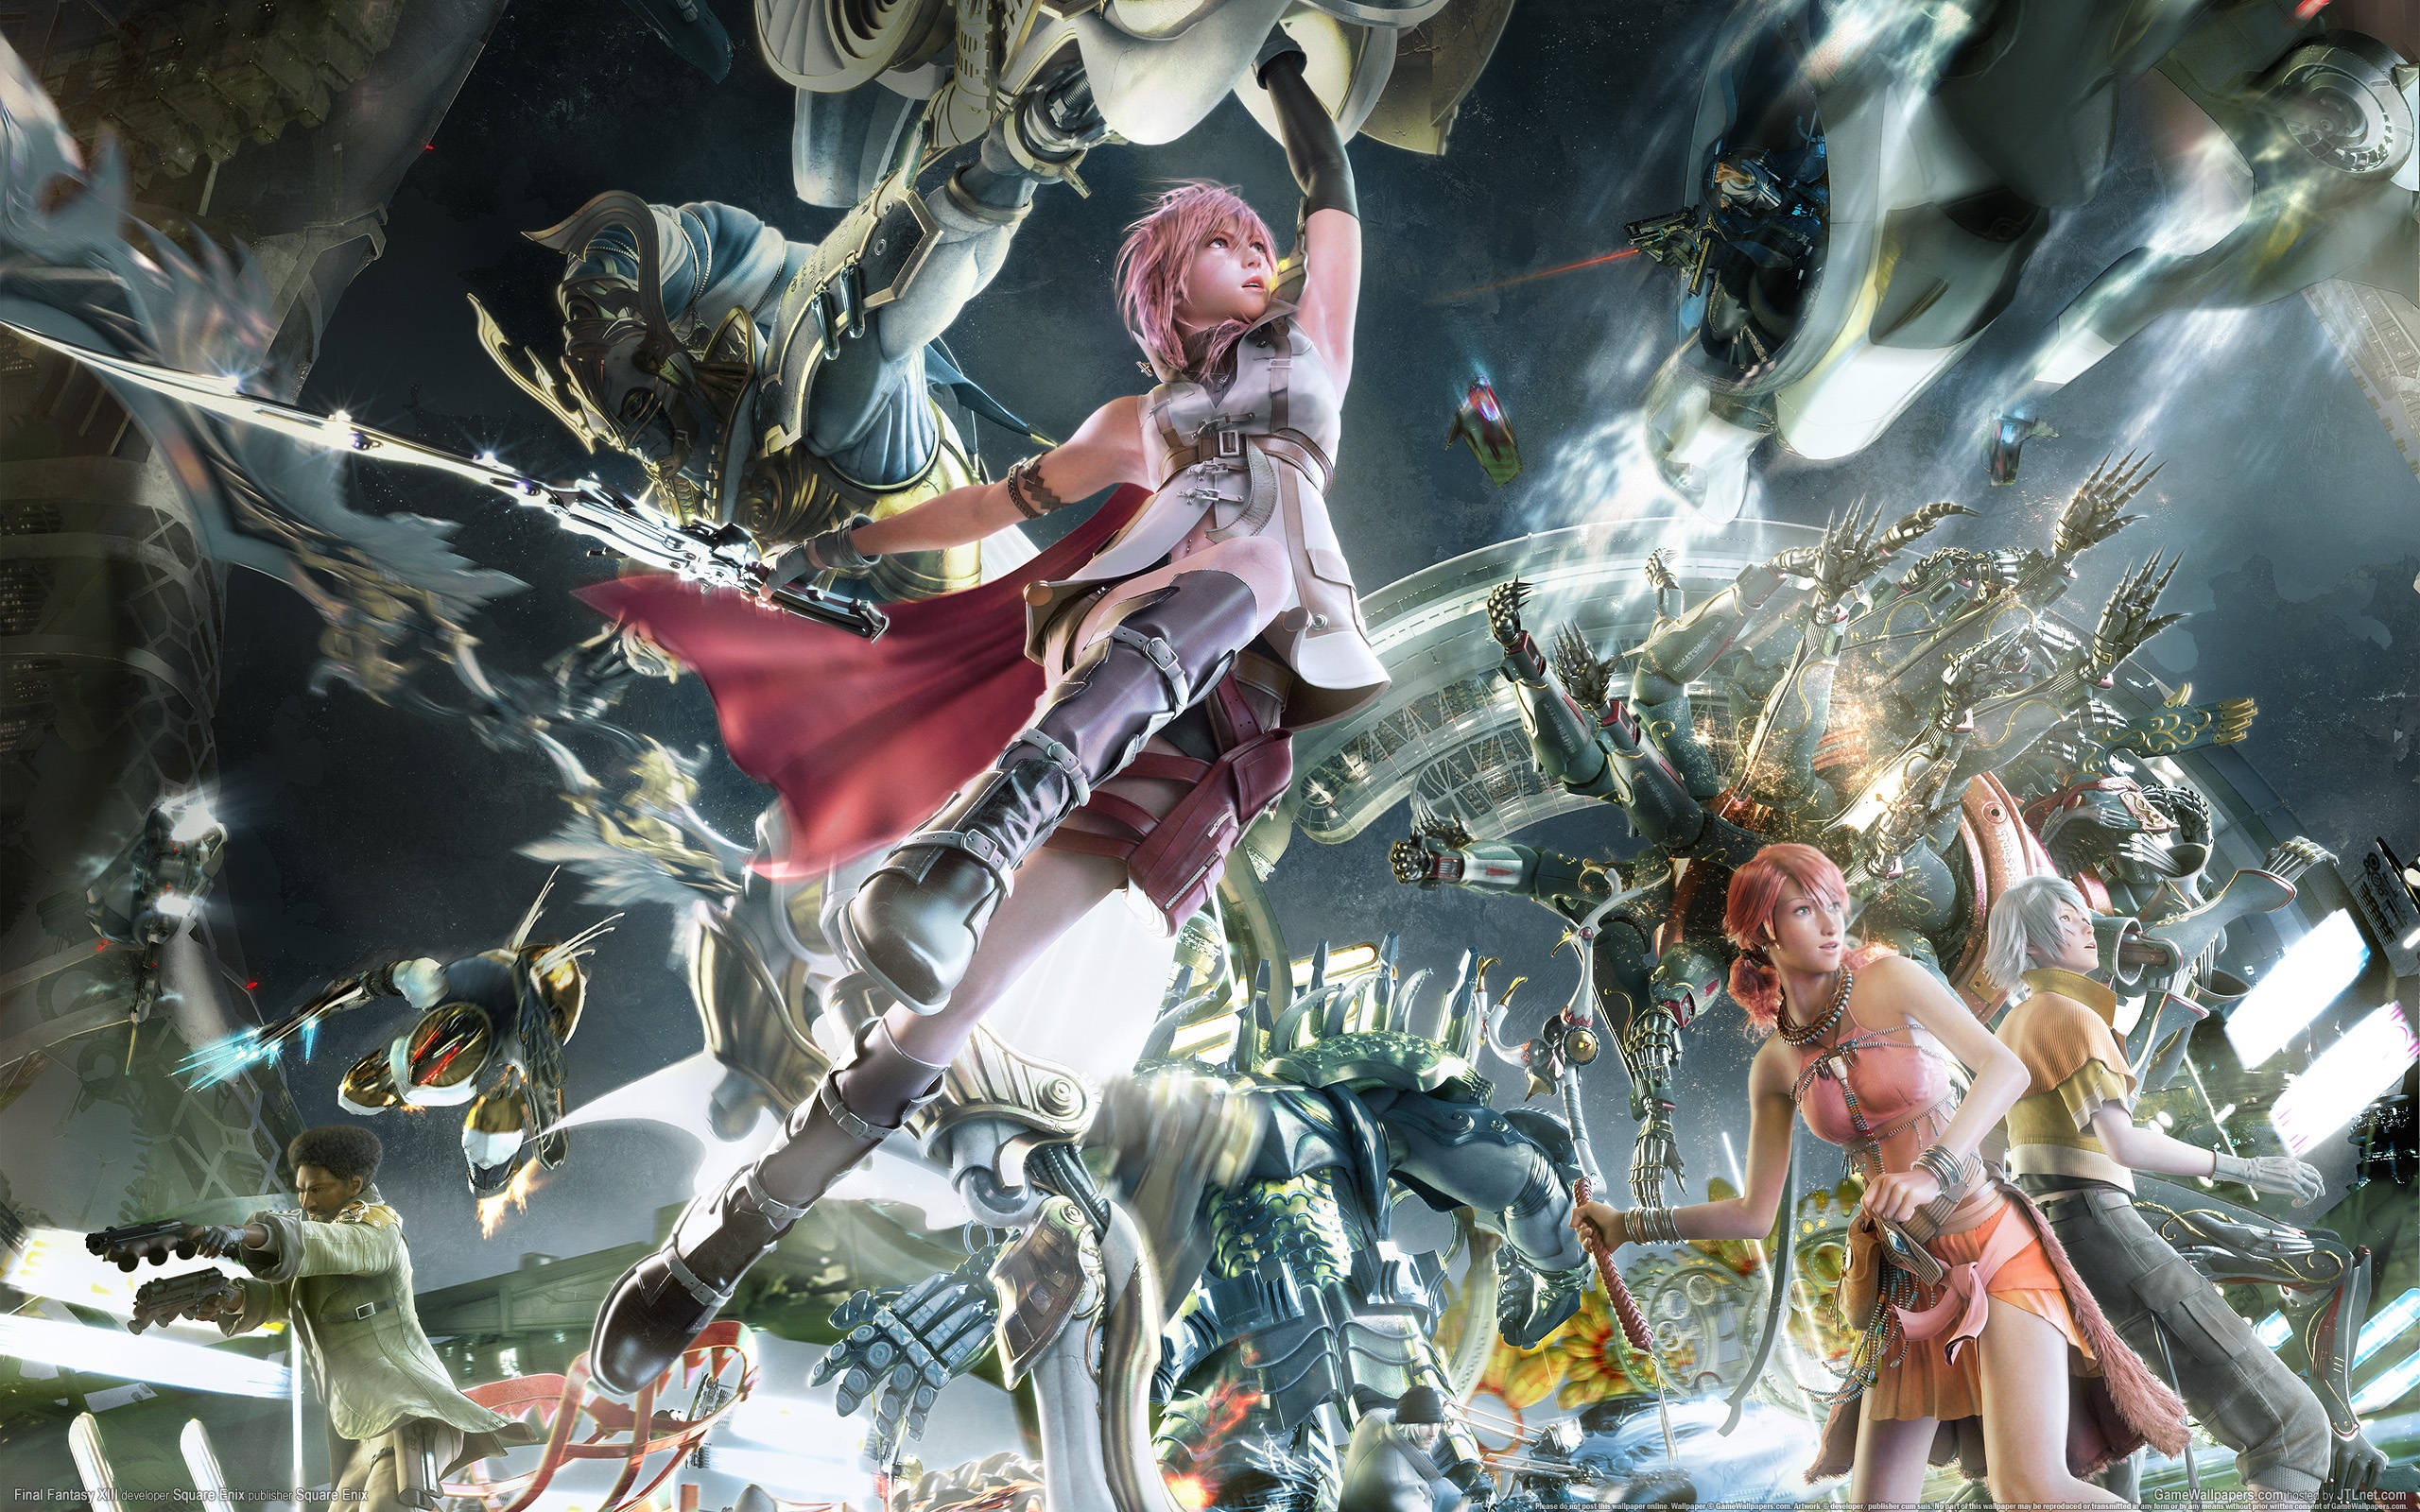 Final Fantasy Xiii T L Chargement Plet De Jeu Pc